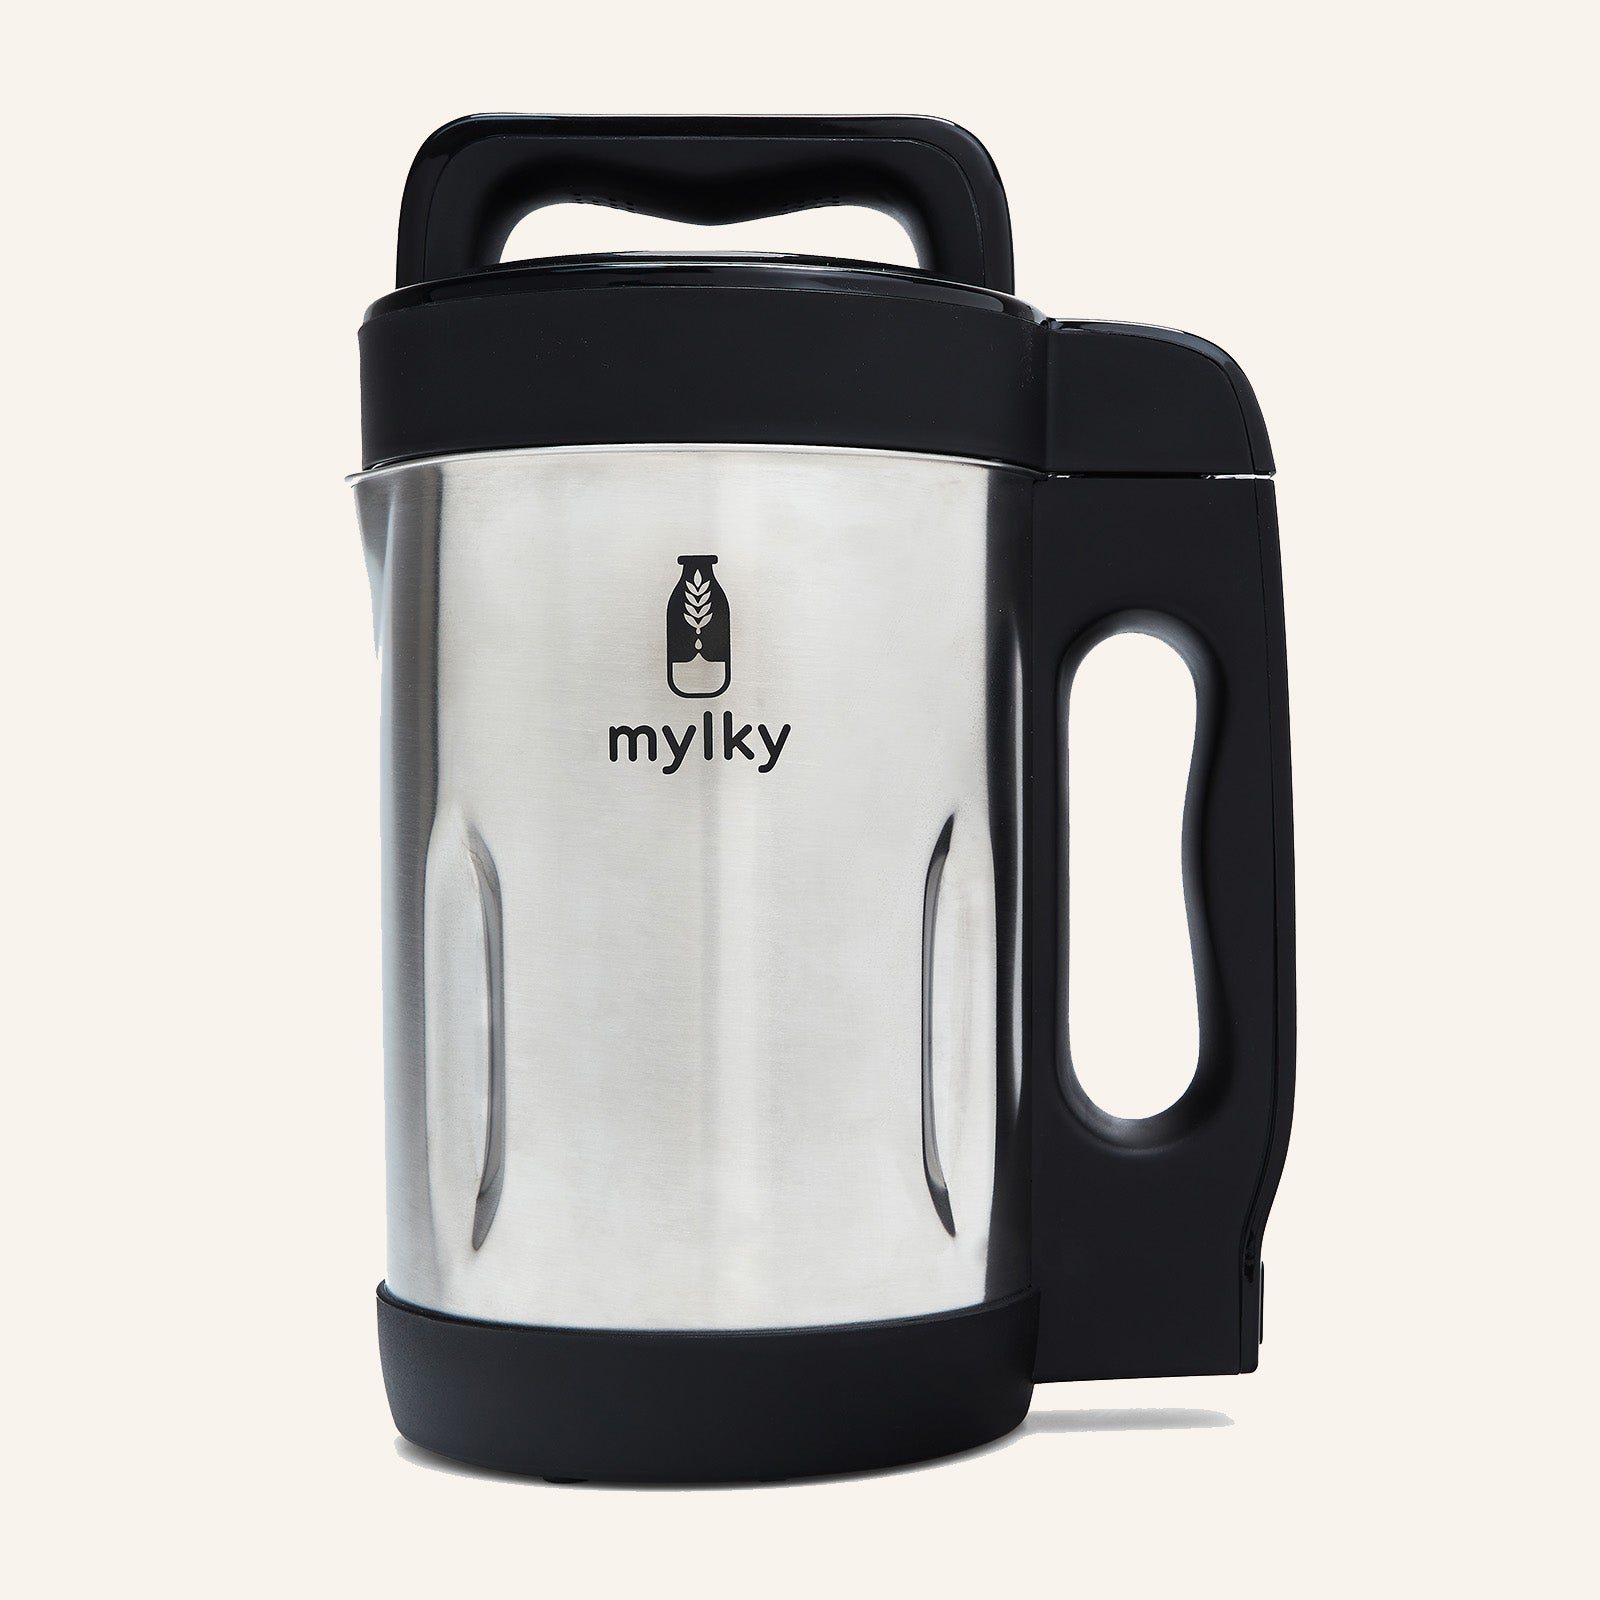 Mylky - The New Milk Maker